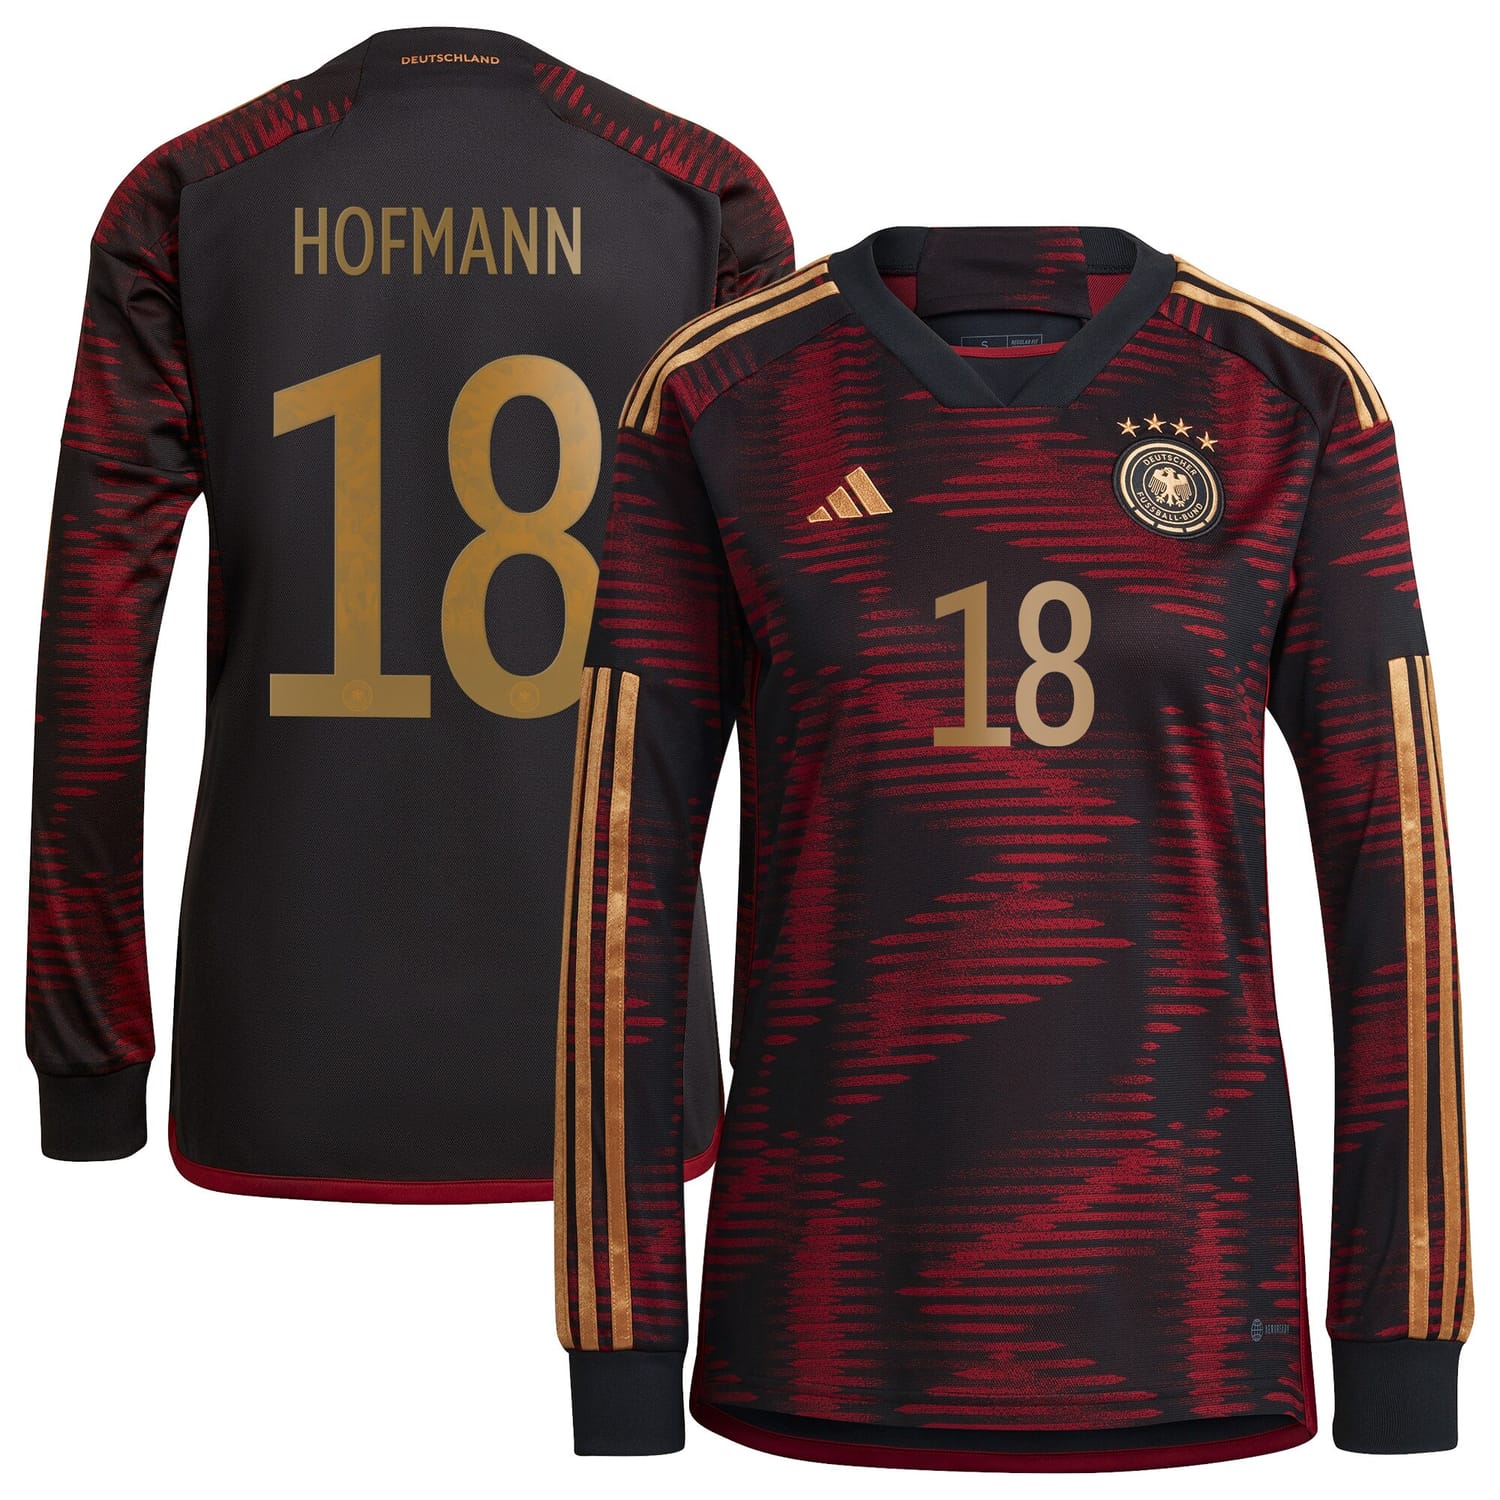 Germany National Team Away Jersey Shirt Long Sleeve player Jonas Hofmann 18 printing for Women